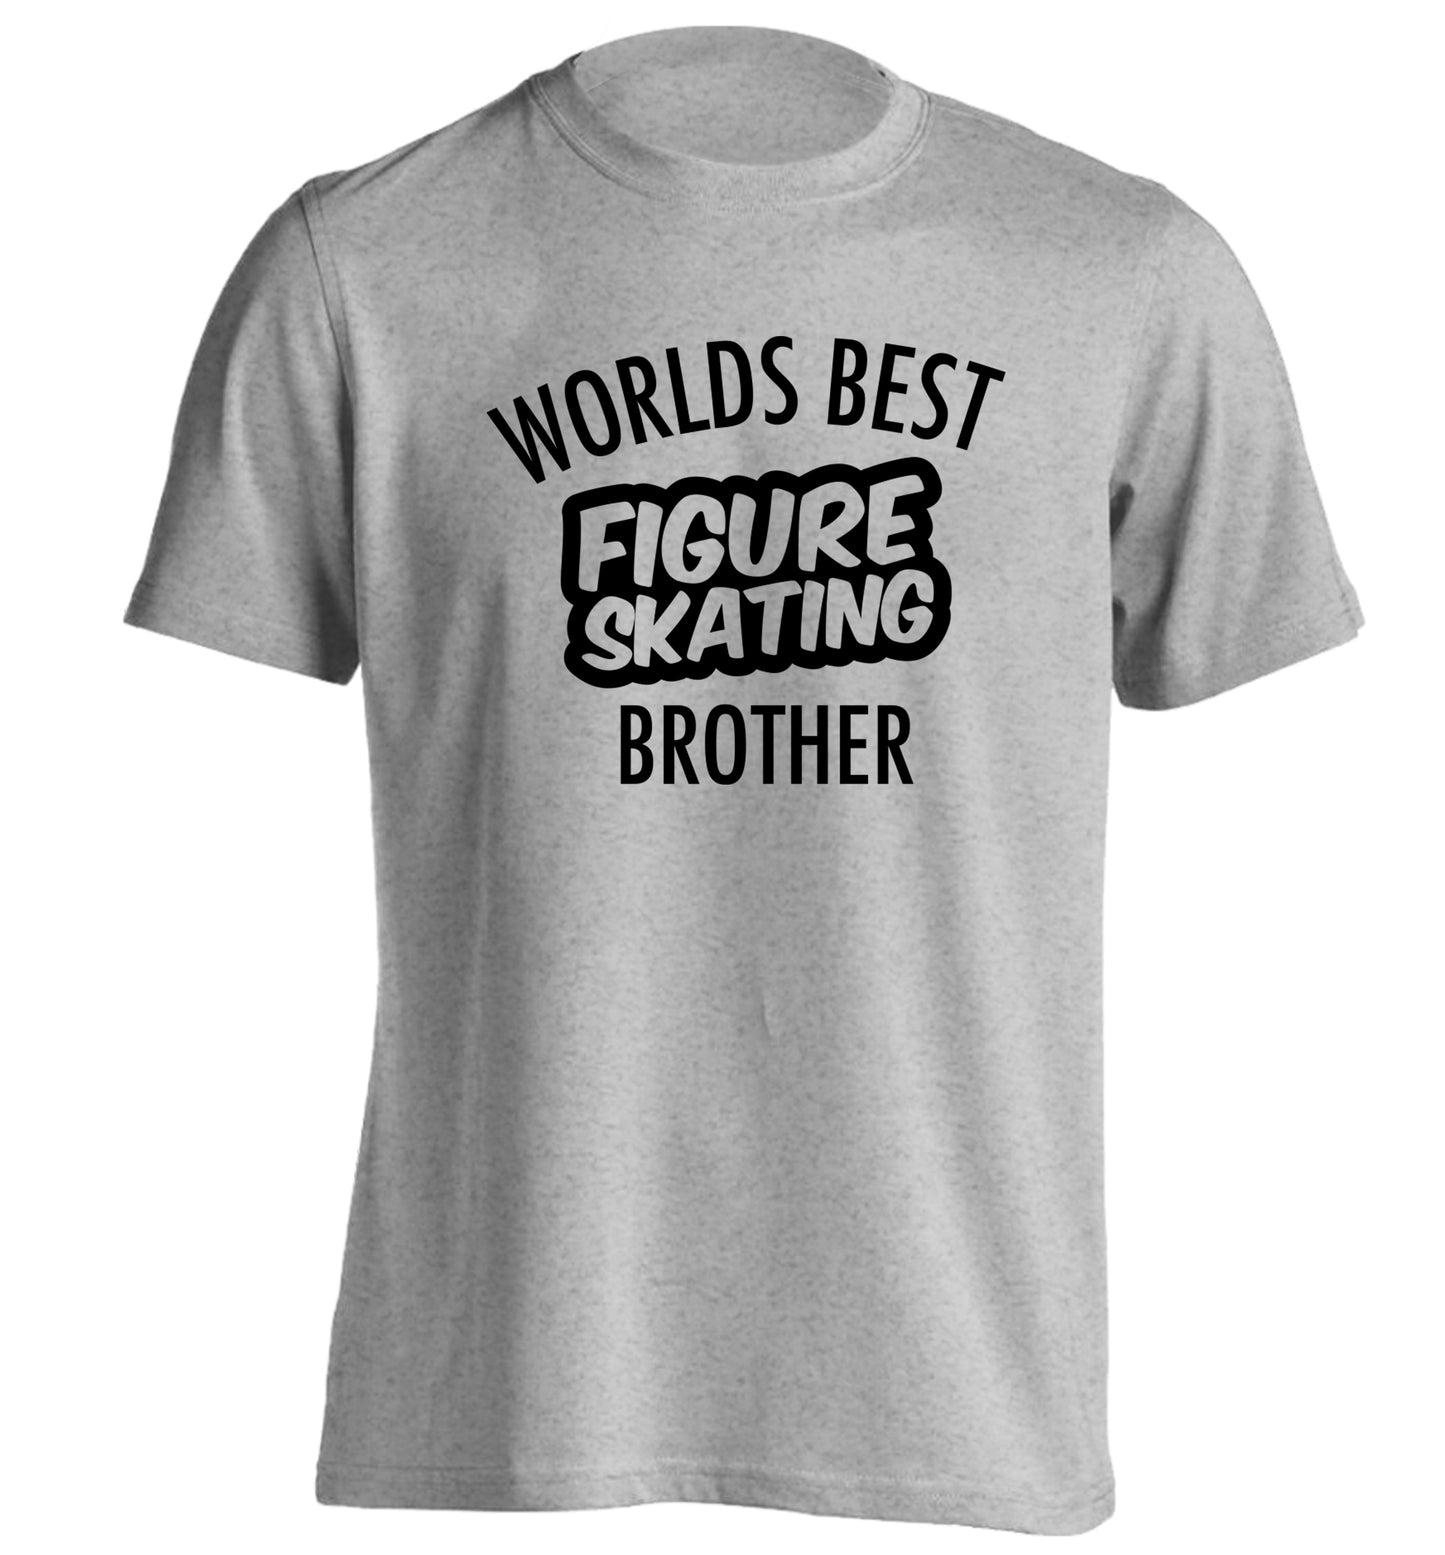 Worlds best figure skating brother adults unisexgrey Tshirt 2XL